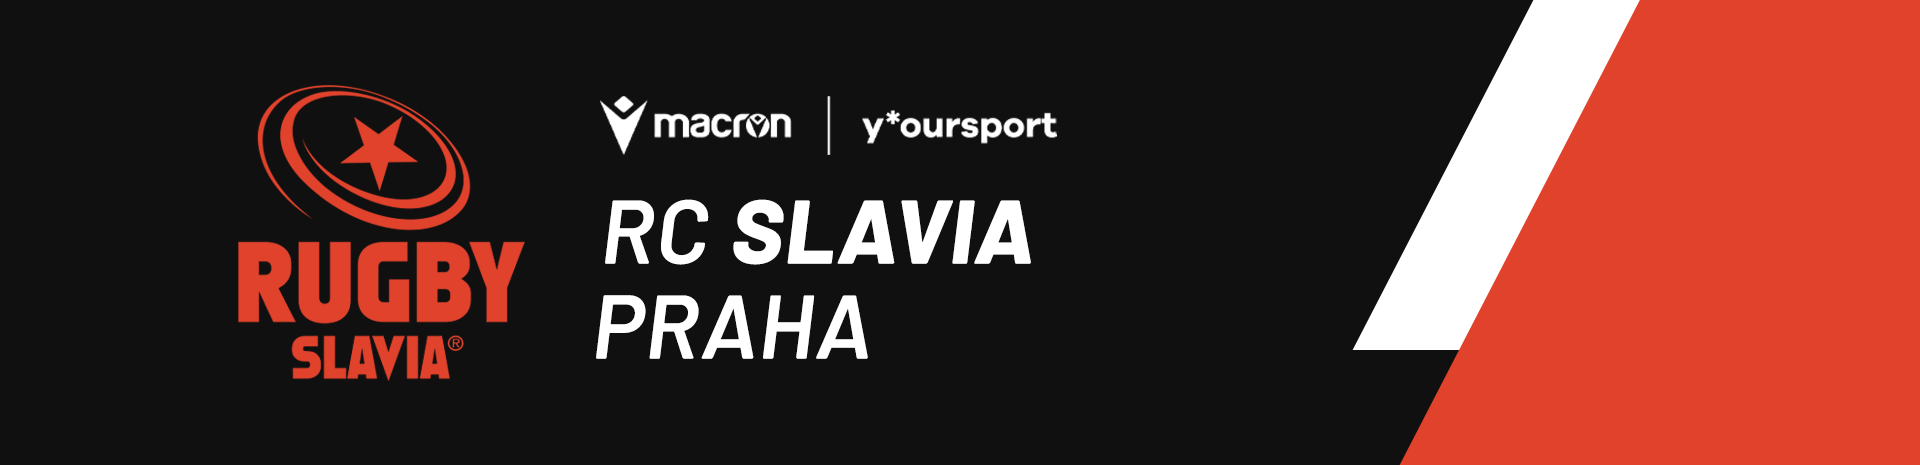 RC Slavia Praha desktop